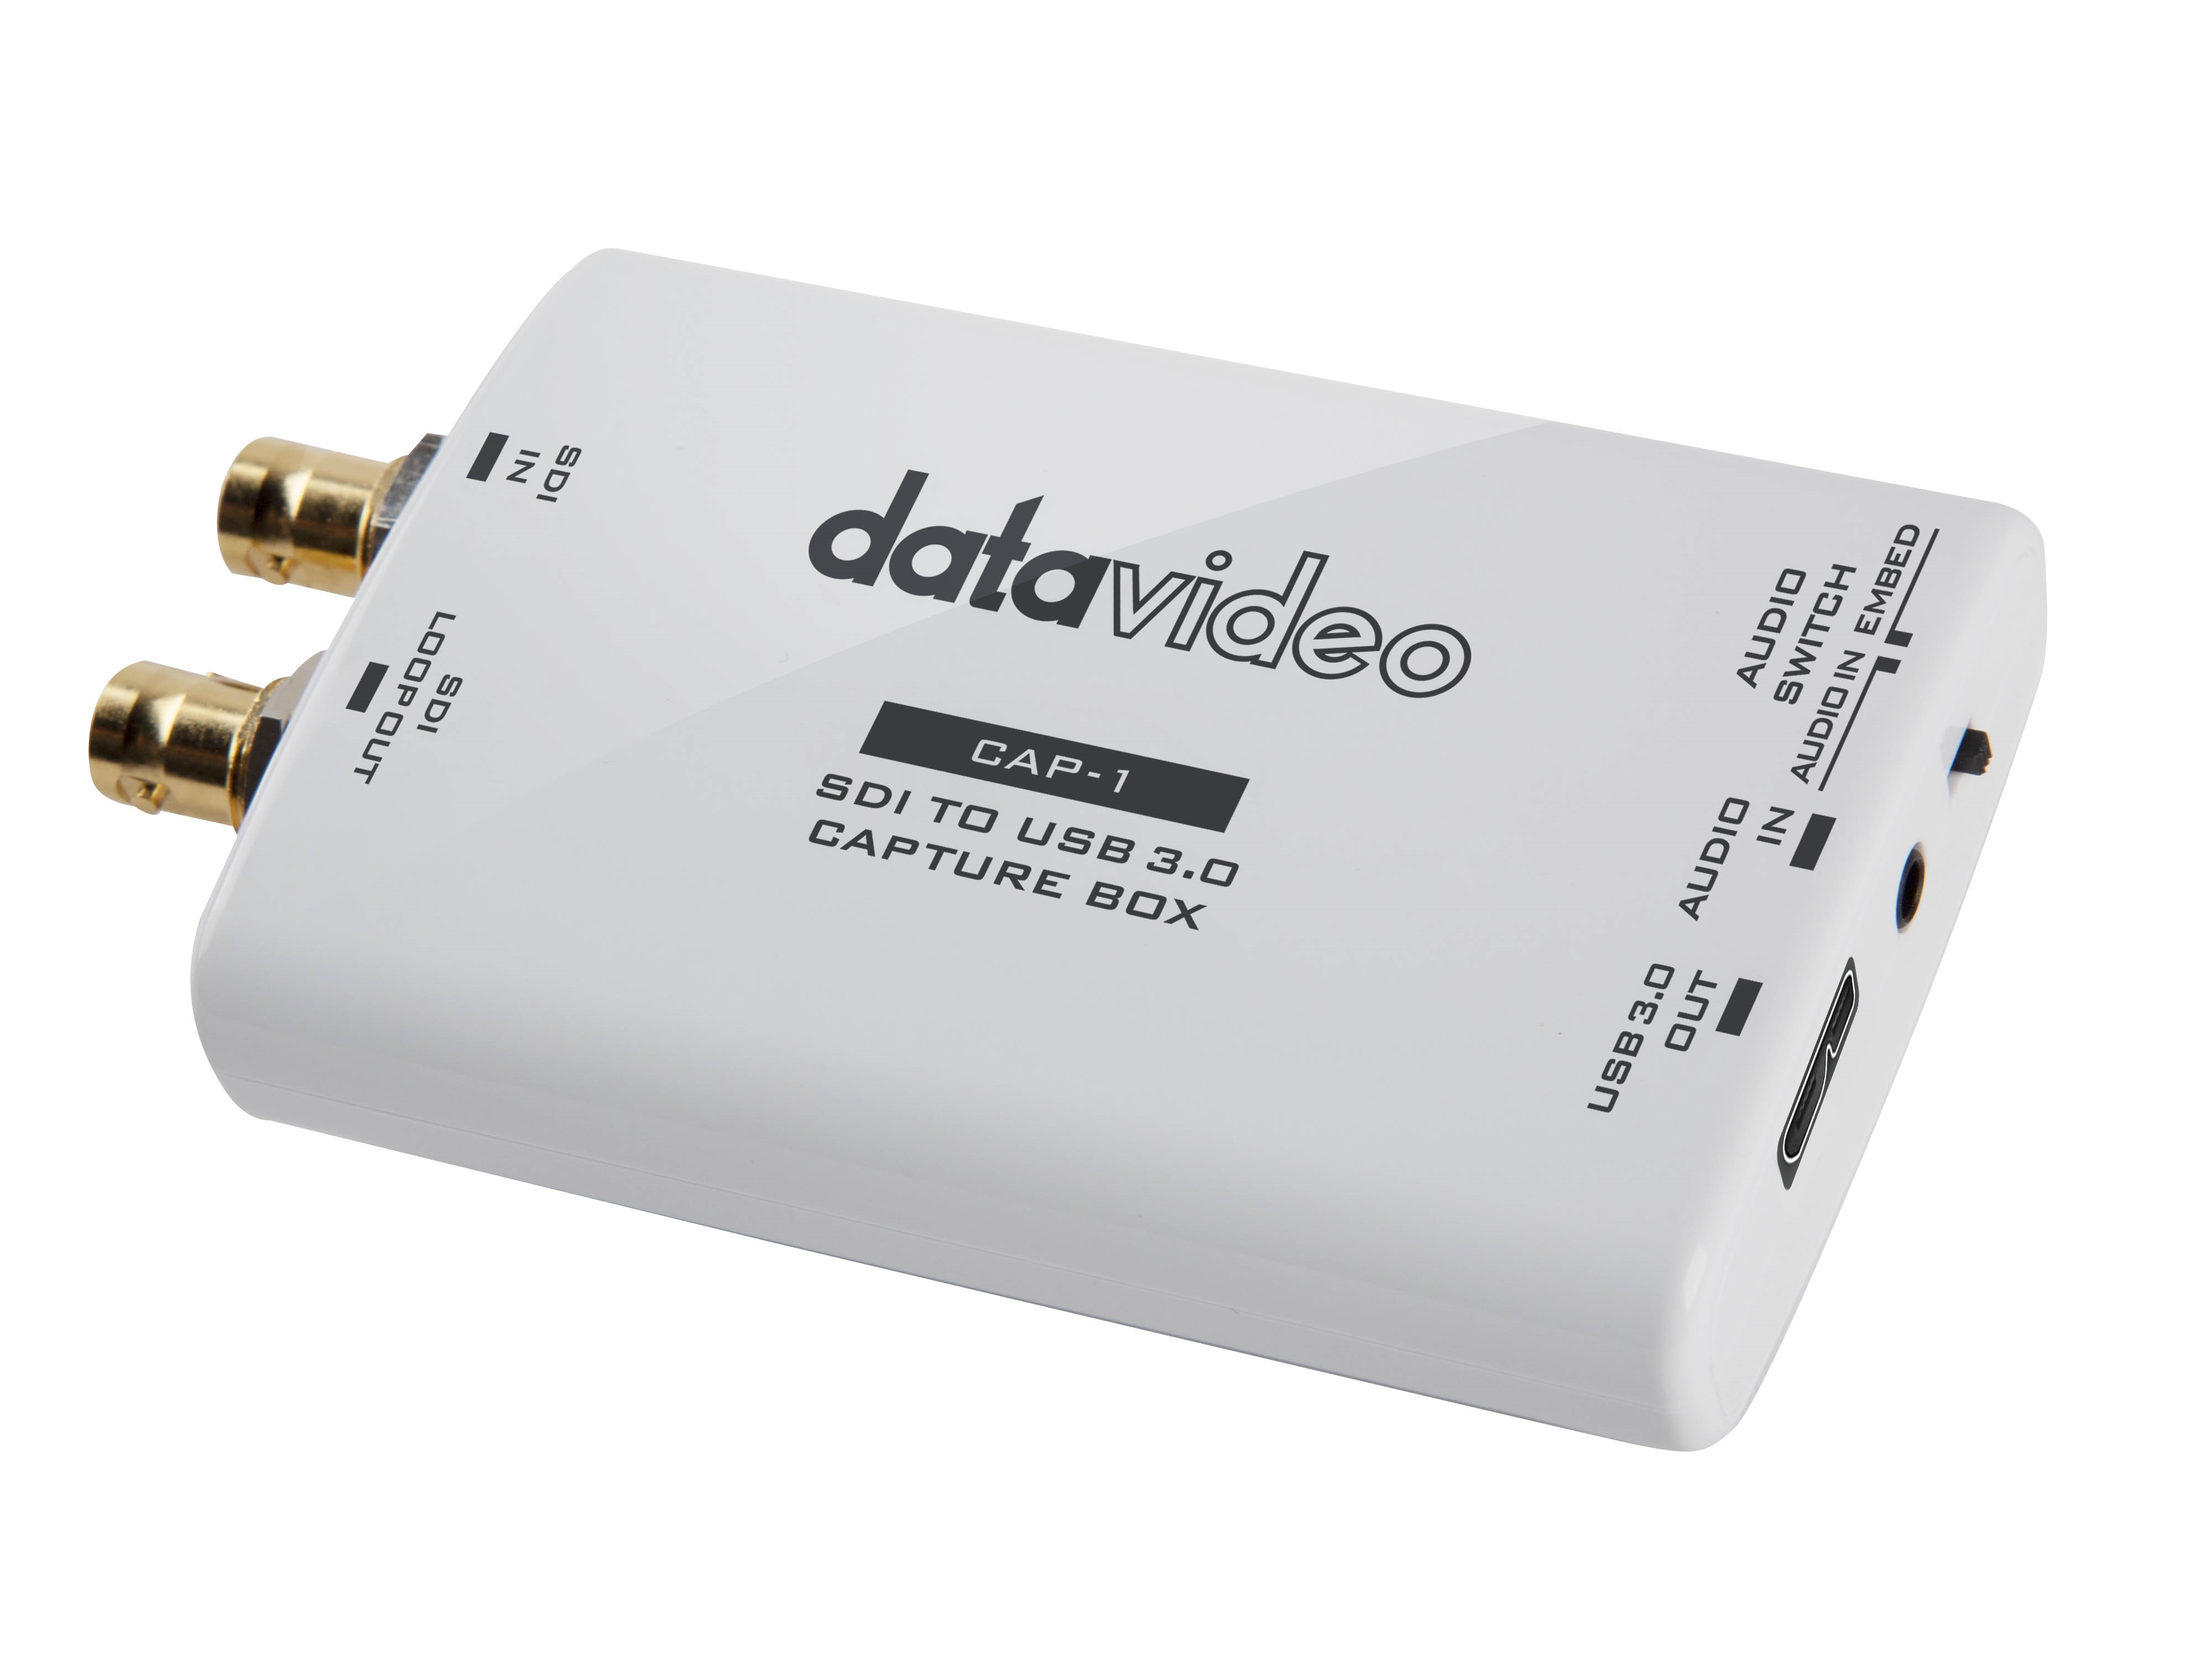 CAP-1 SDI to USB 3.0 Capture Box by Datavideo